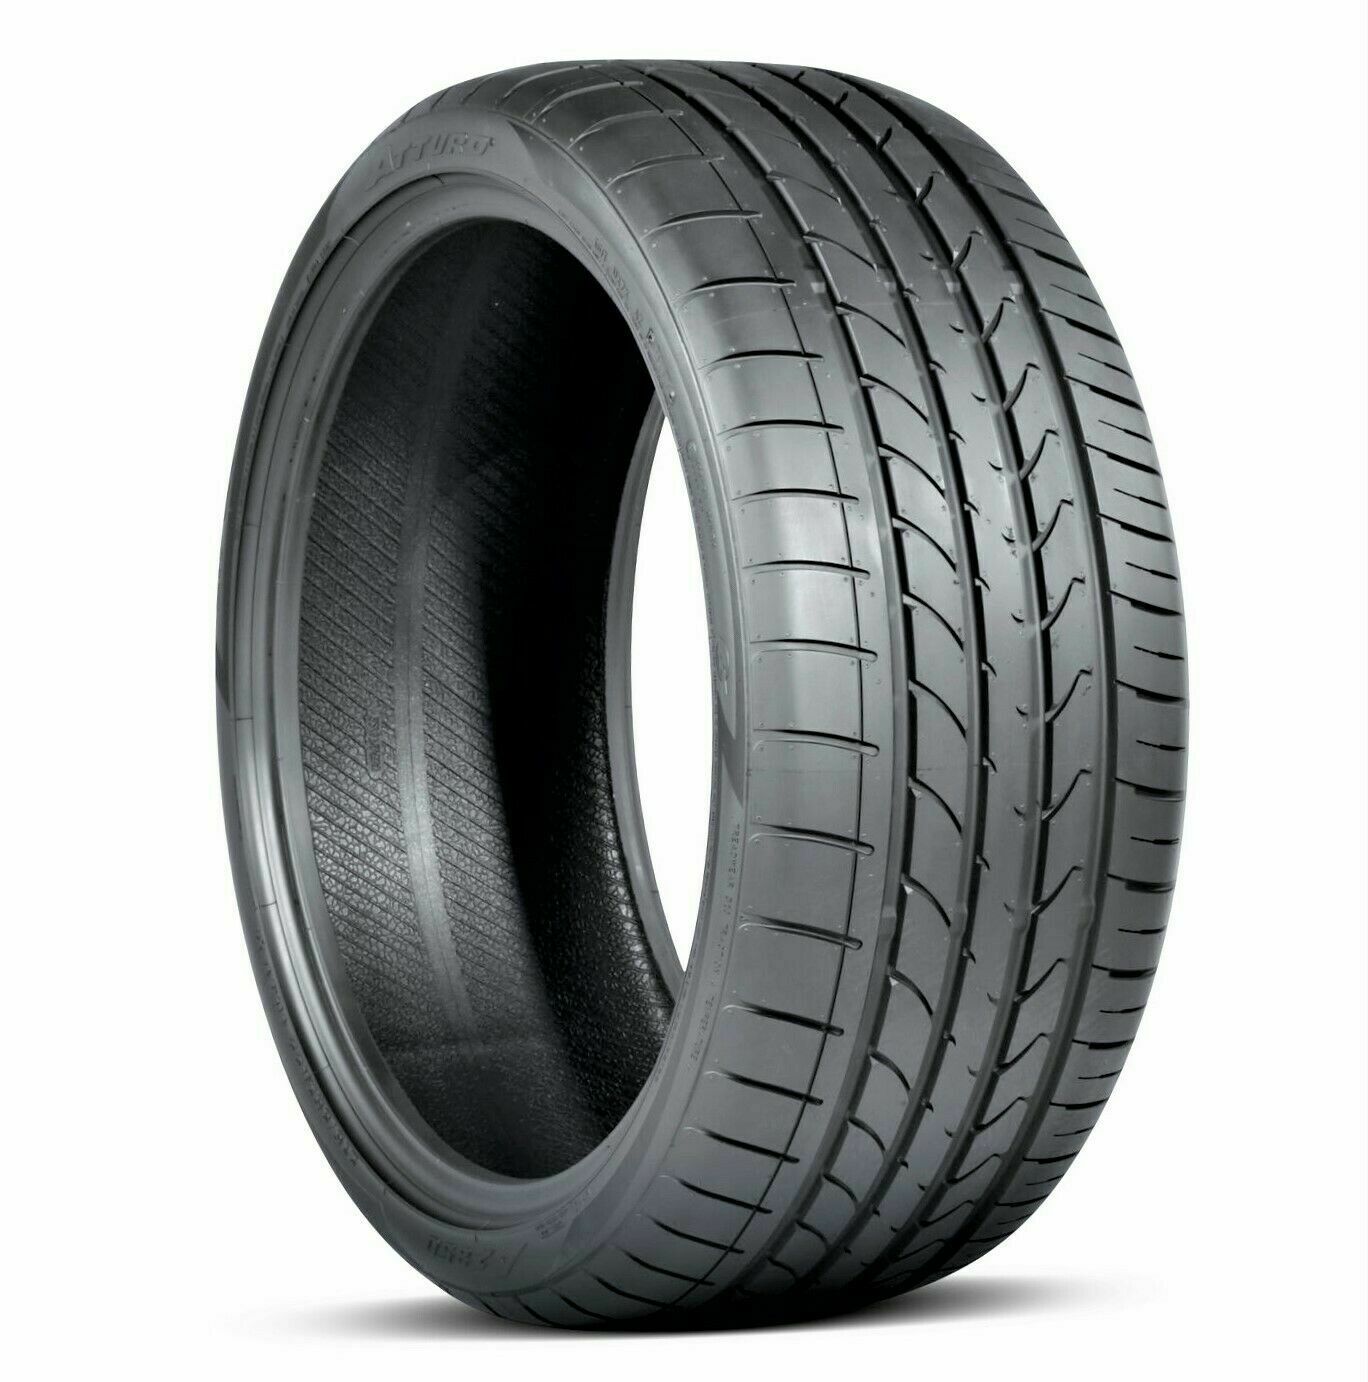 Atturo AZ850 Street Performance Staggered Tire Set